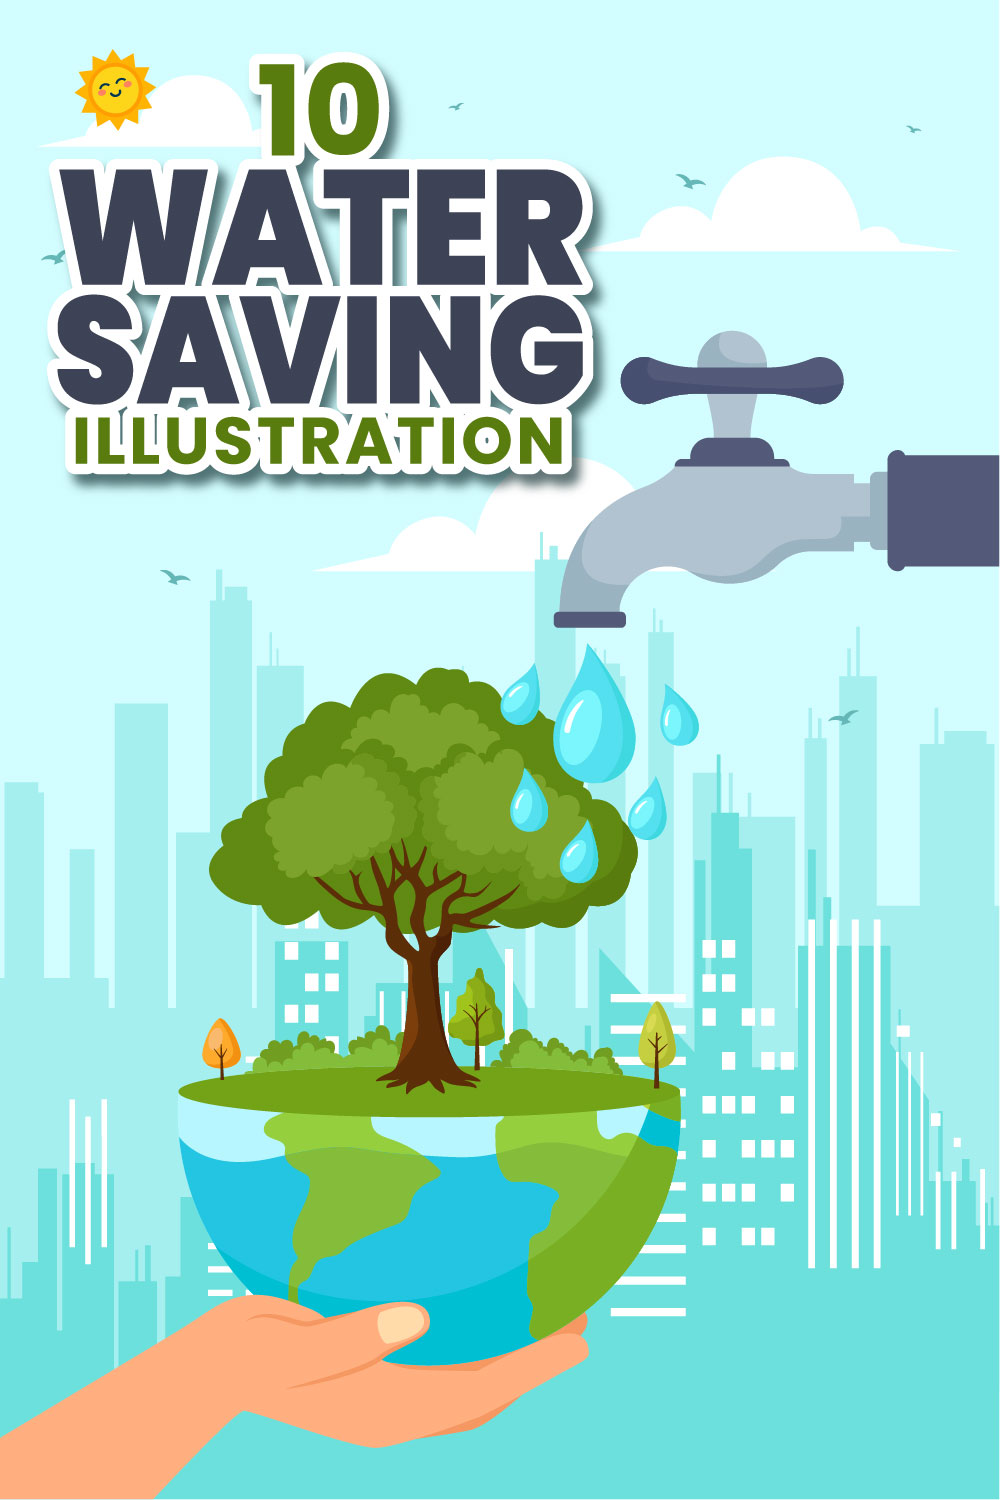 10 Water Saving Illustration pinterest preview image.